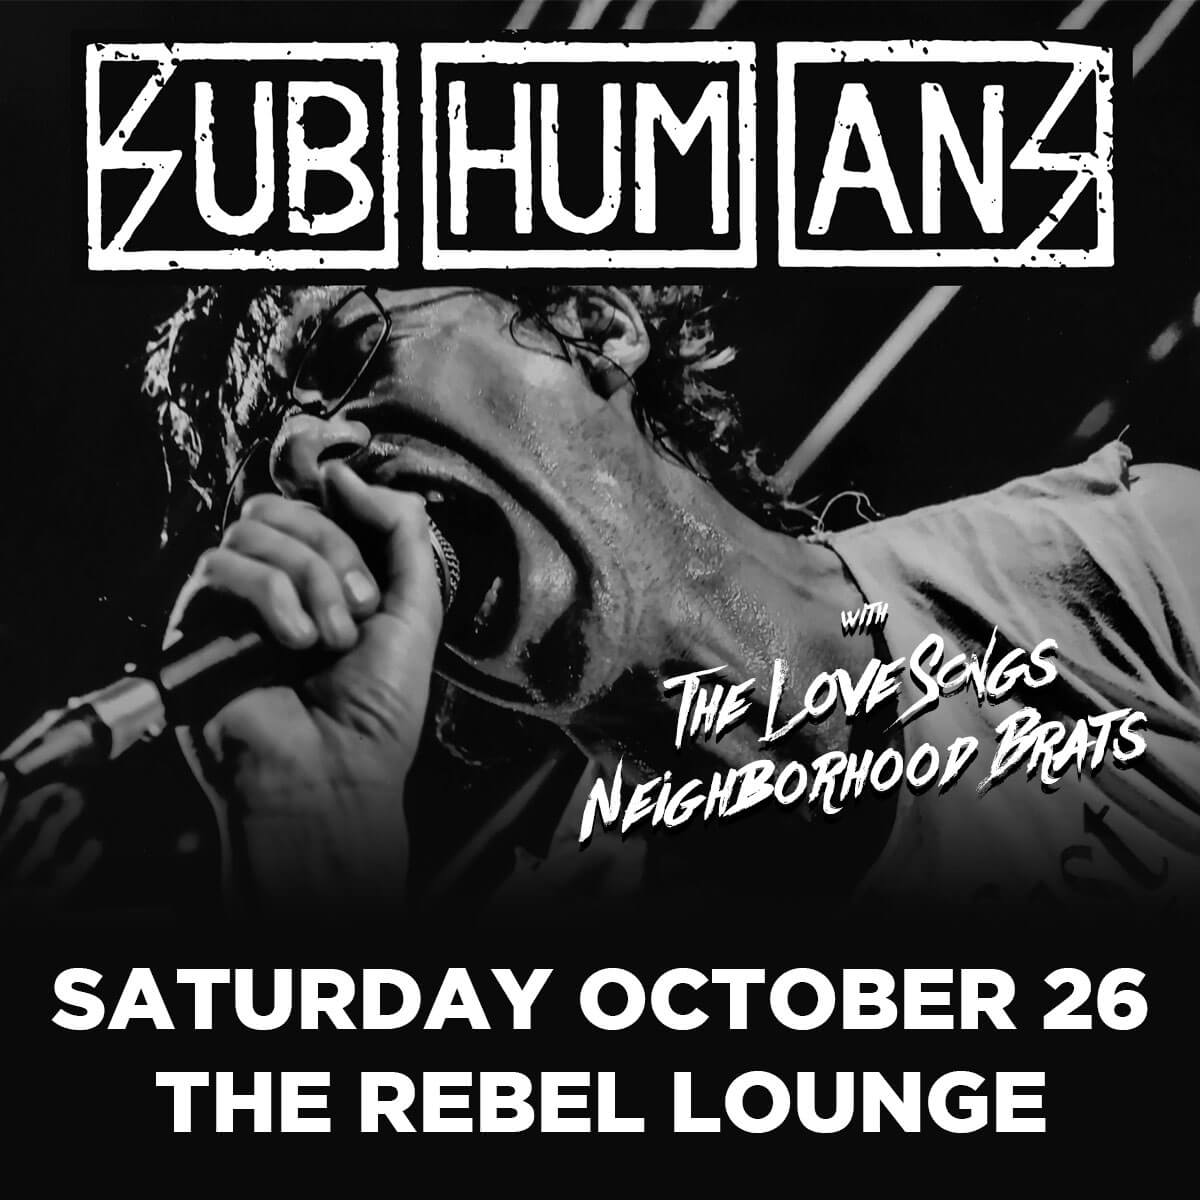 SUBHUMANSThe Rebel Lounge